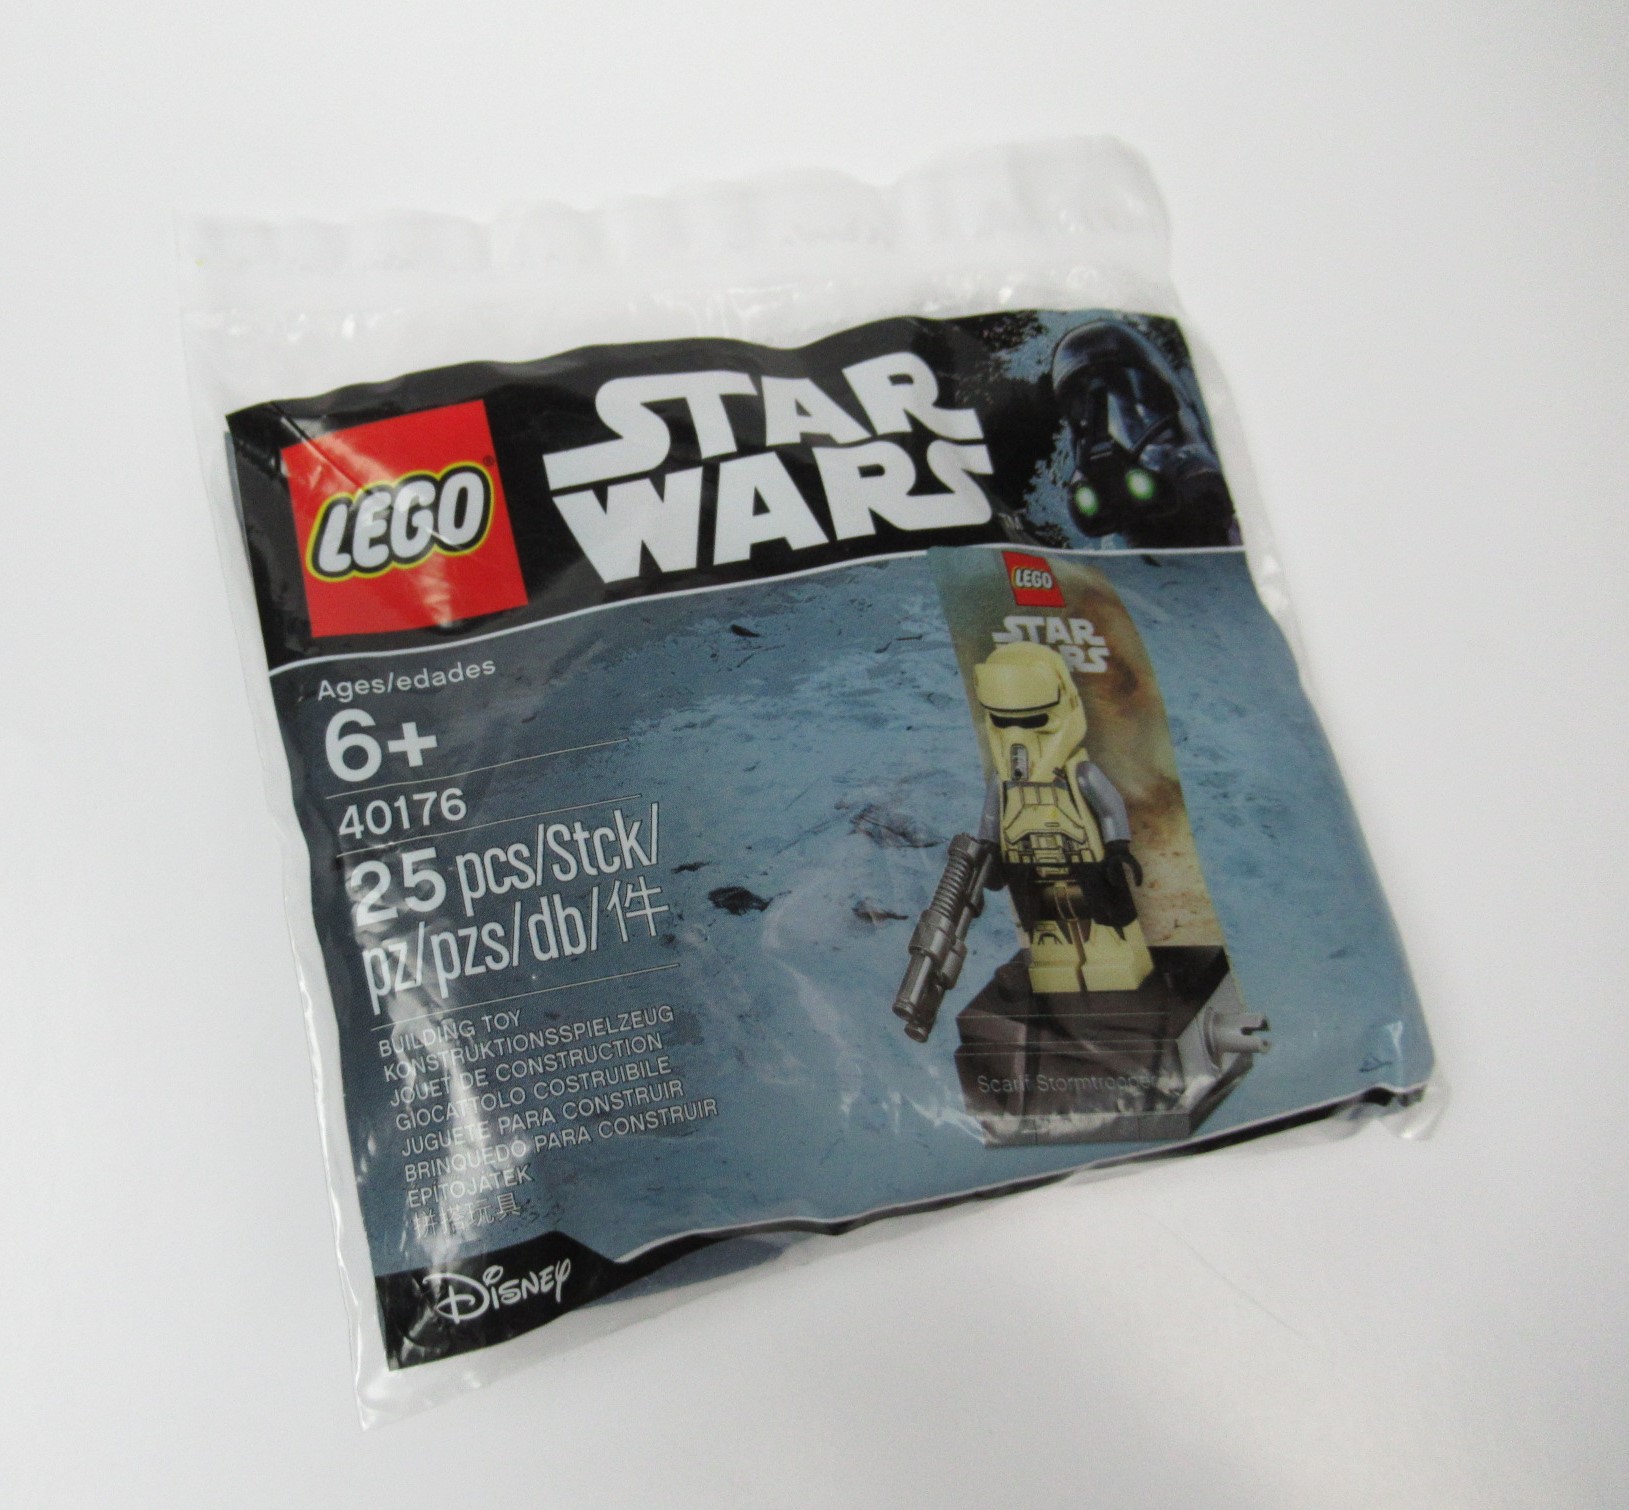 Kép a LEGO® Star Wars 40176 Star Wars Scarif Stormtrooper Polybag